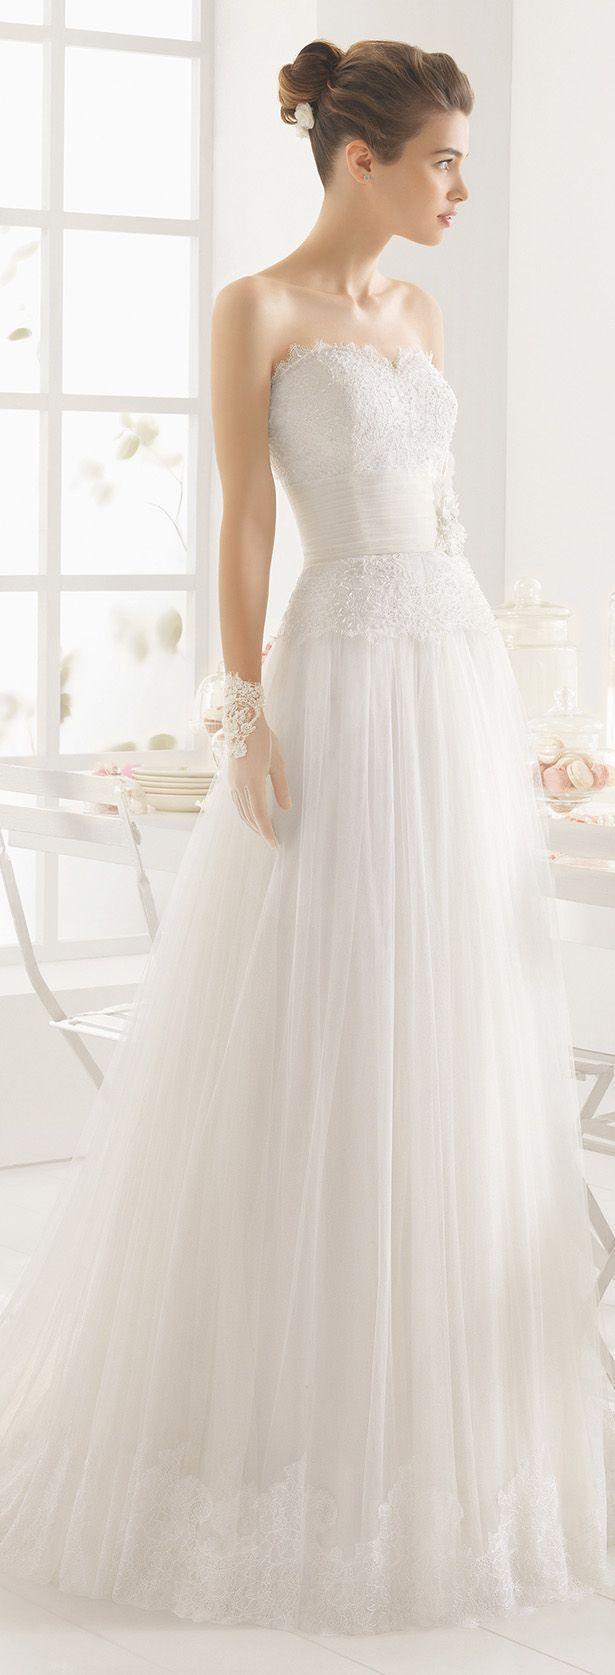 Wedding - Bridal Fashion Inspiration